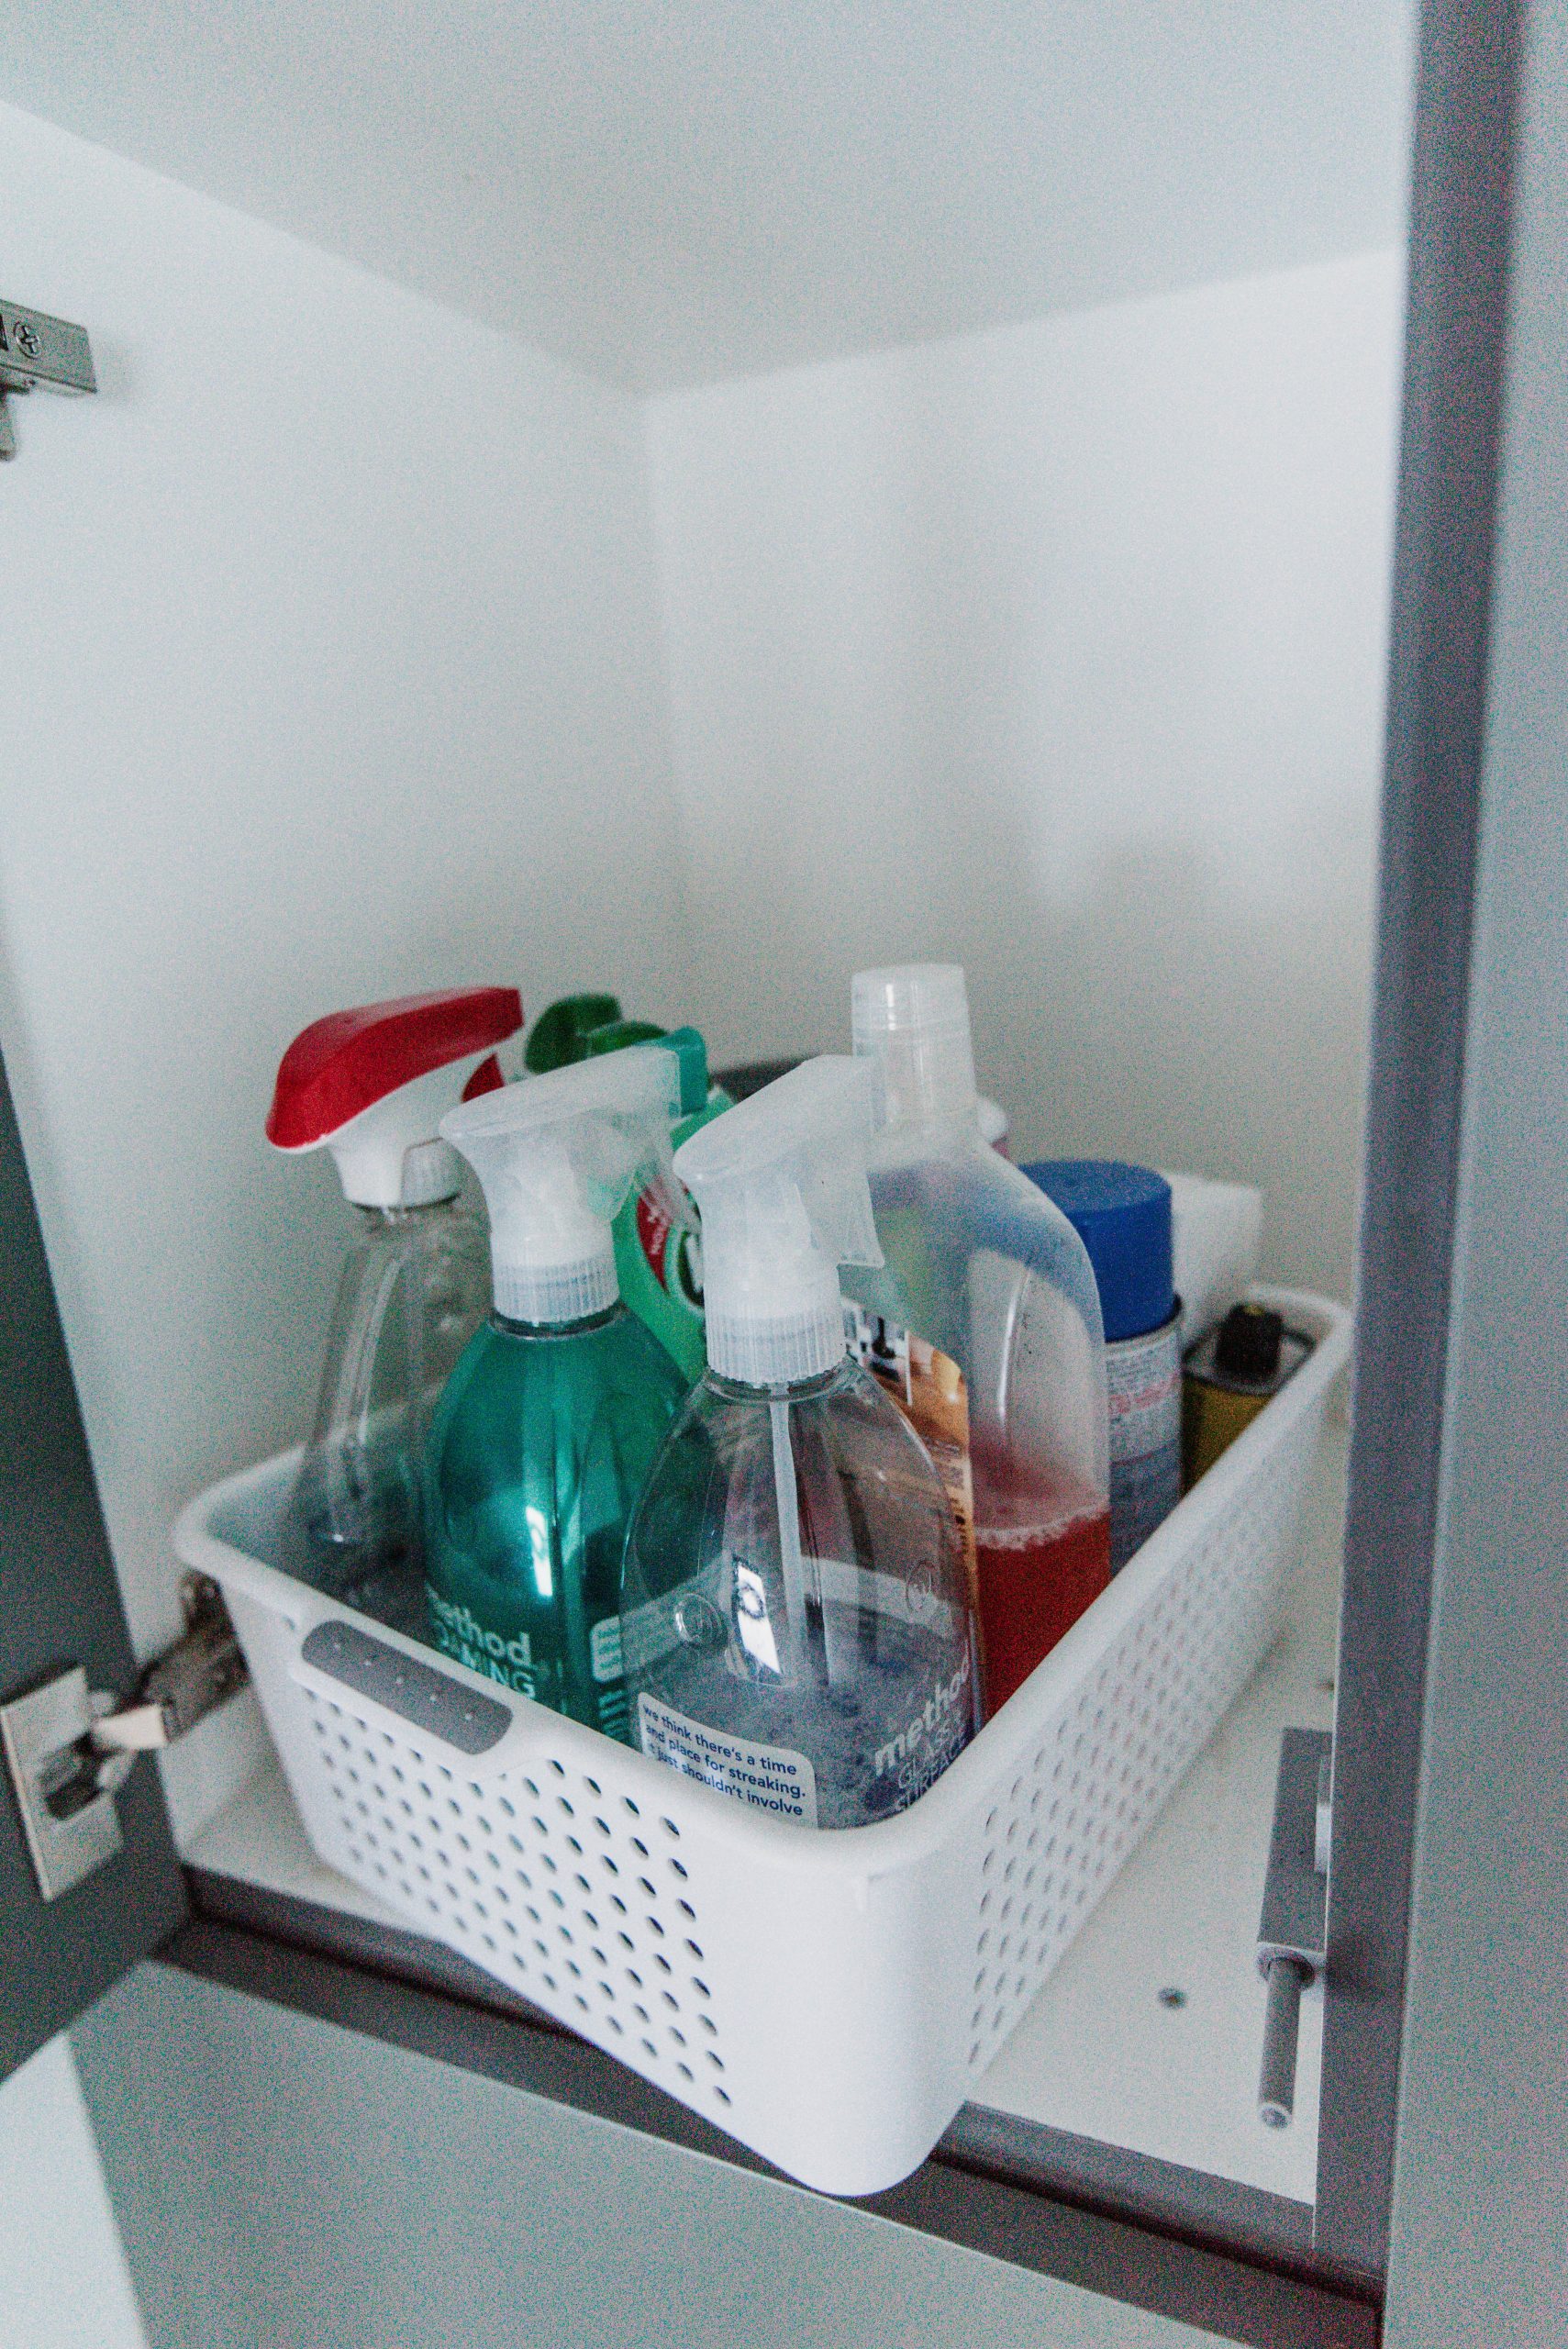 Cleaning cupboard organization ideas